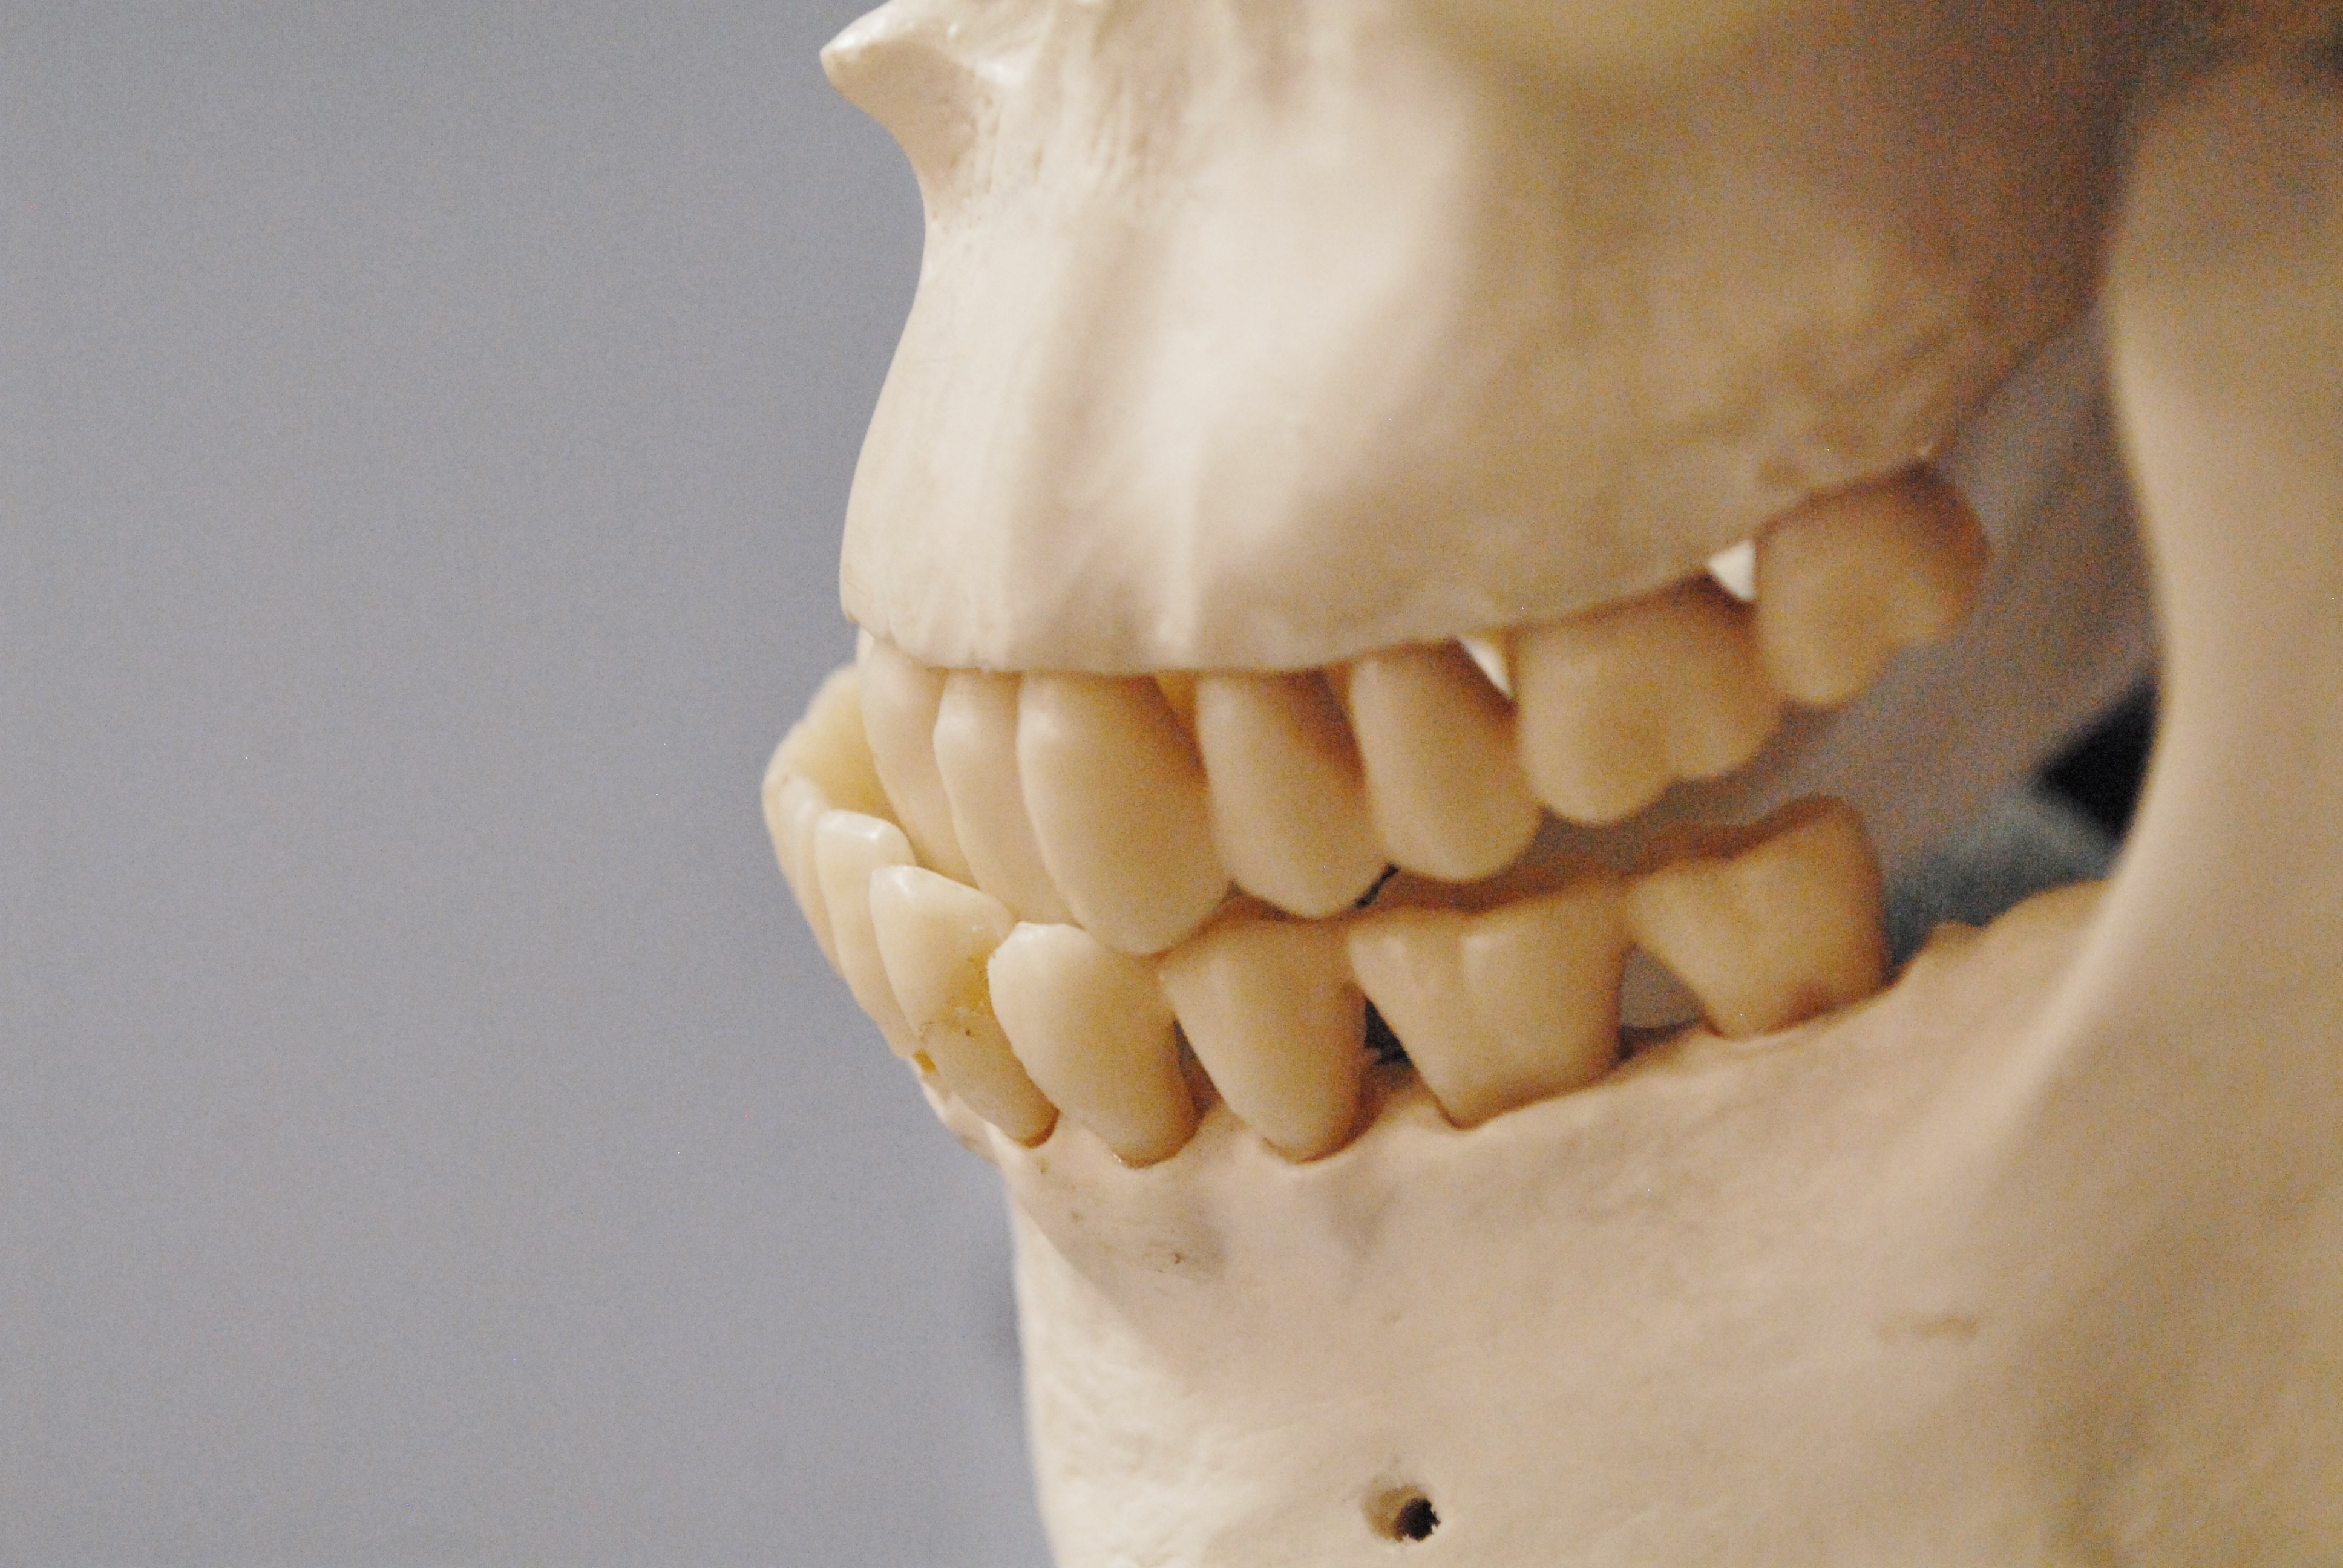 File:Skeleton with misaligned teeth.jpg - Wikimedia Commons